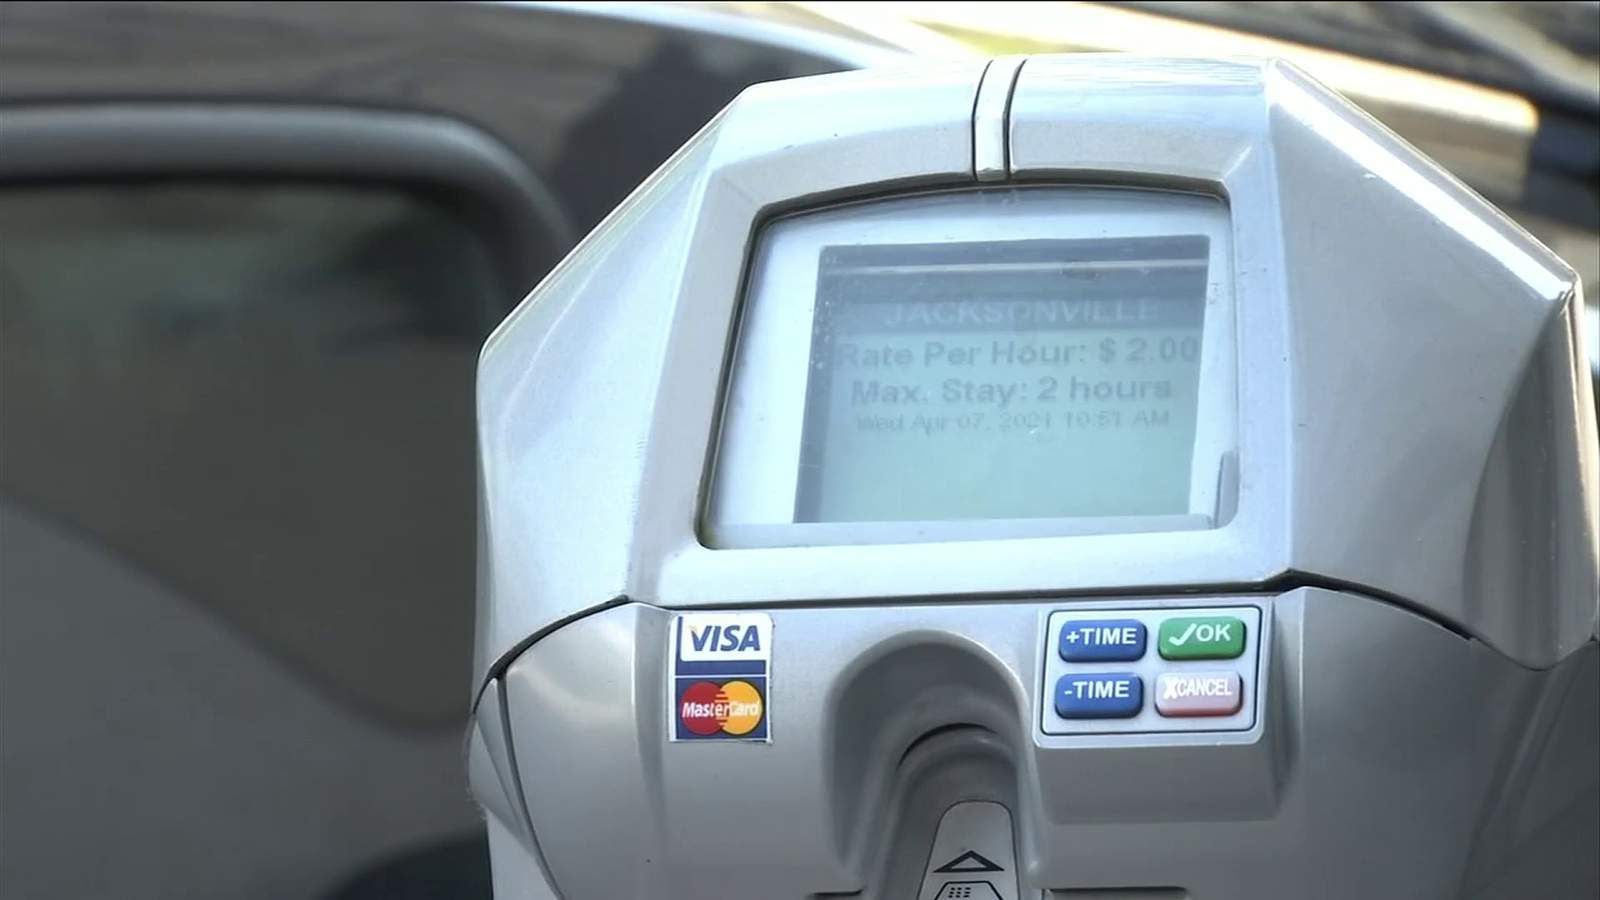 Parking meter prices quadruple in Downtown Jacksonville